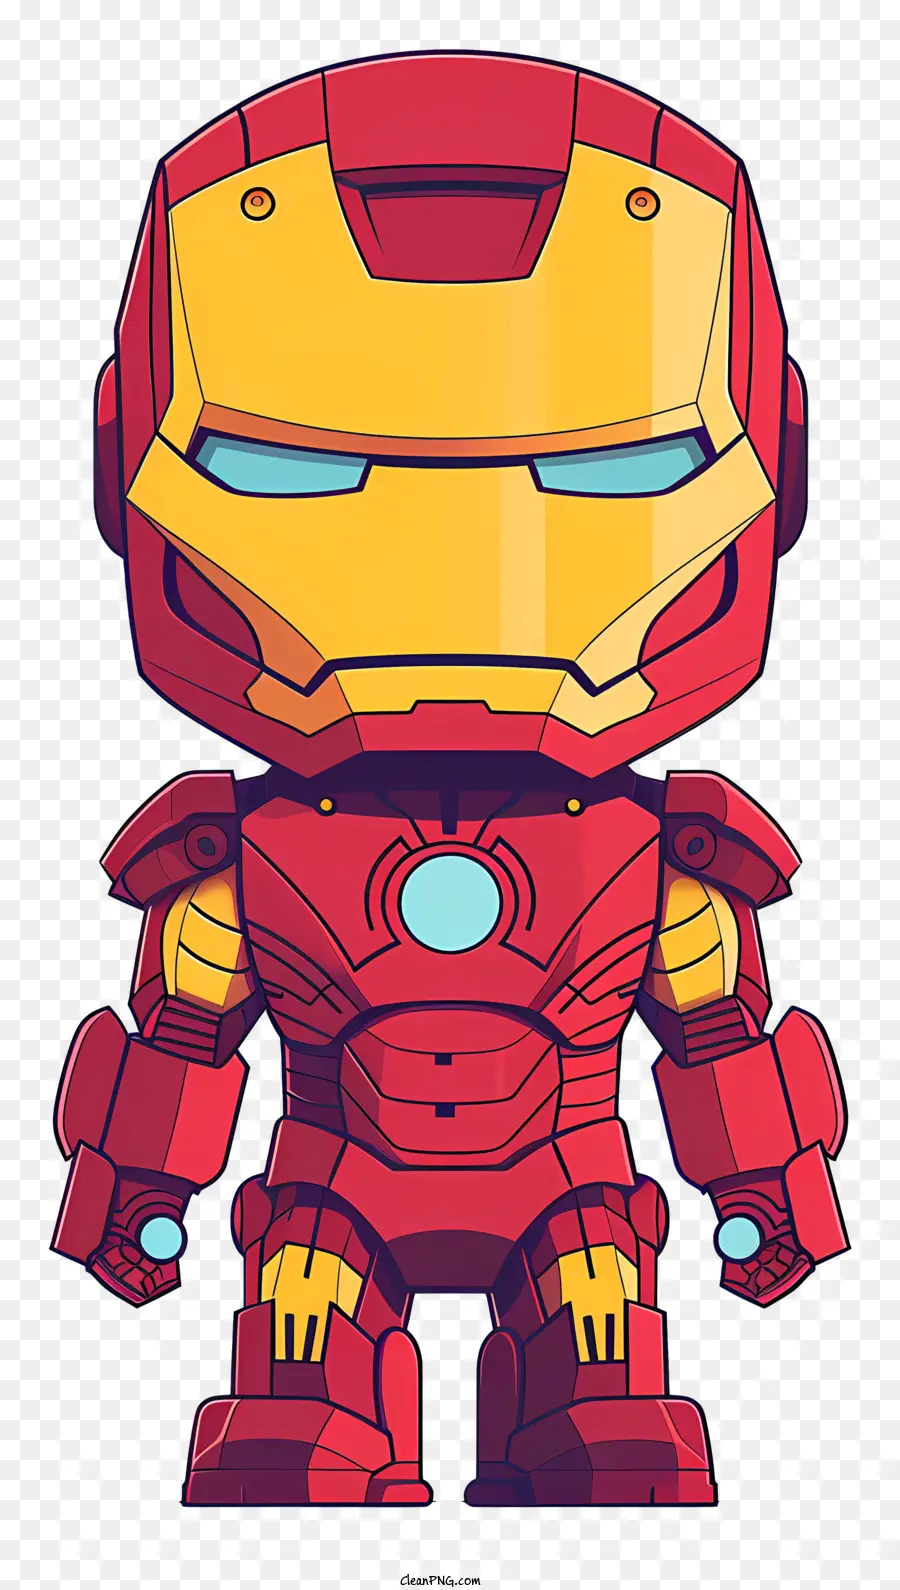 Iron Man - Iron Man Cartoon in Rot und Gold